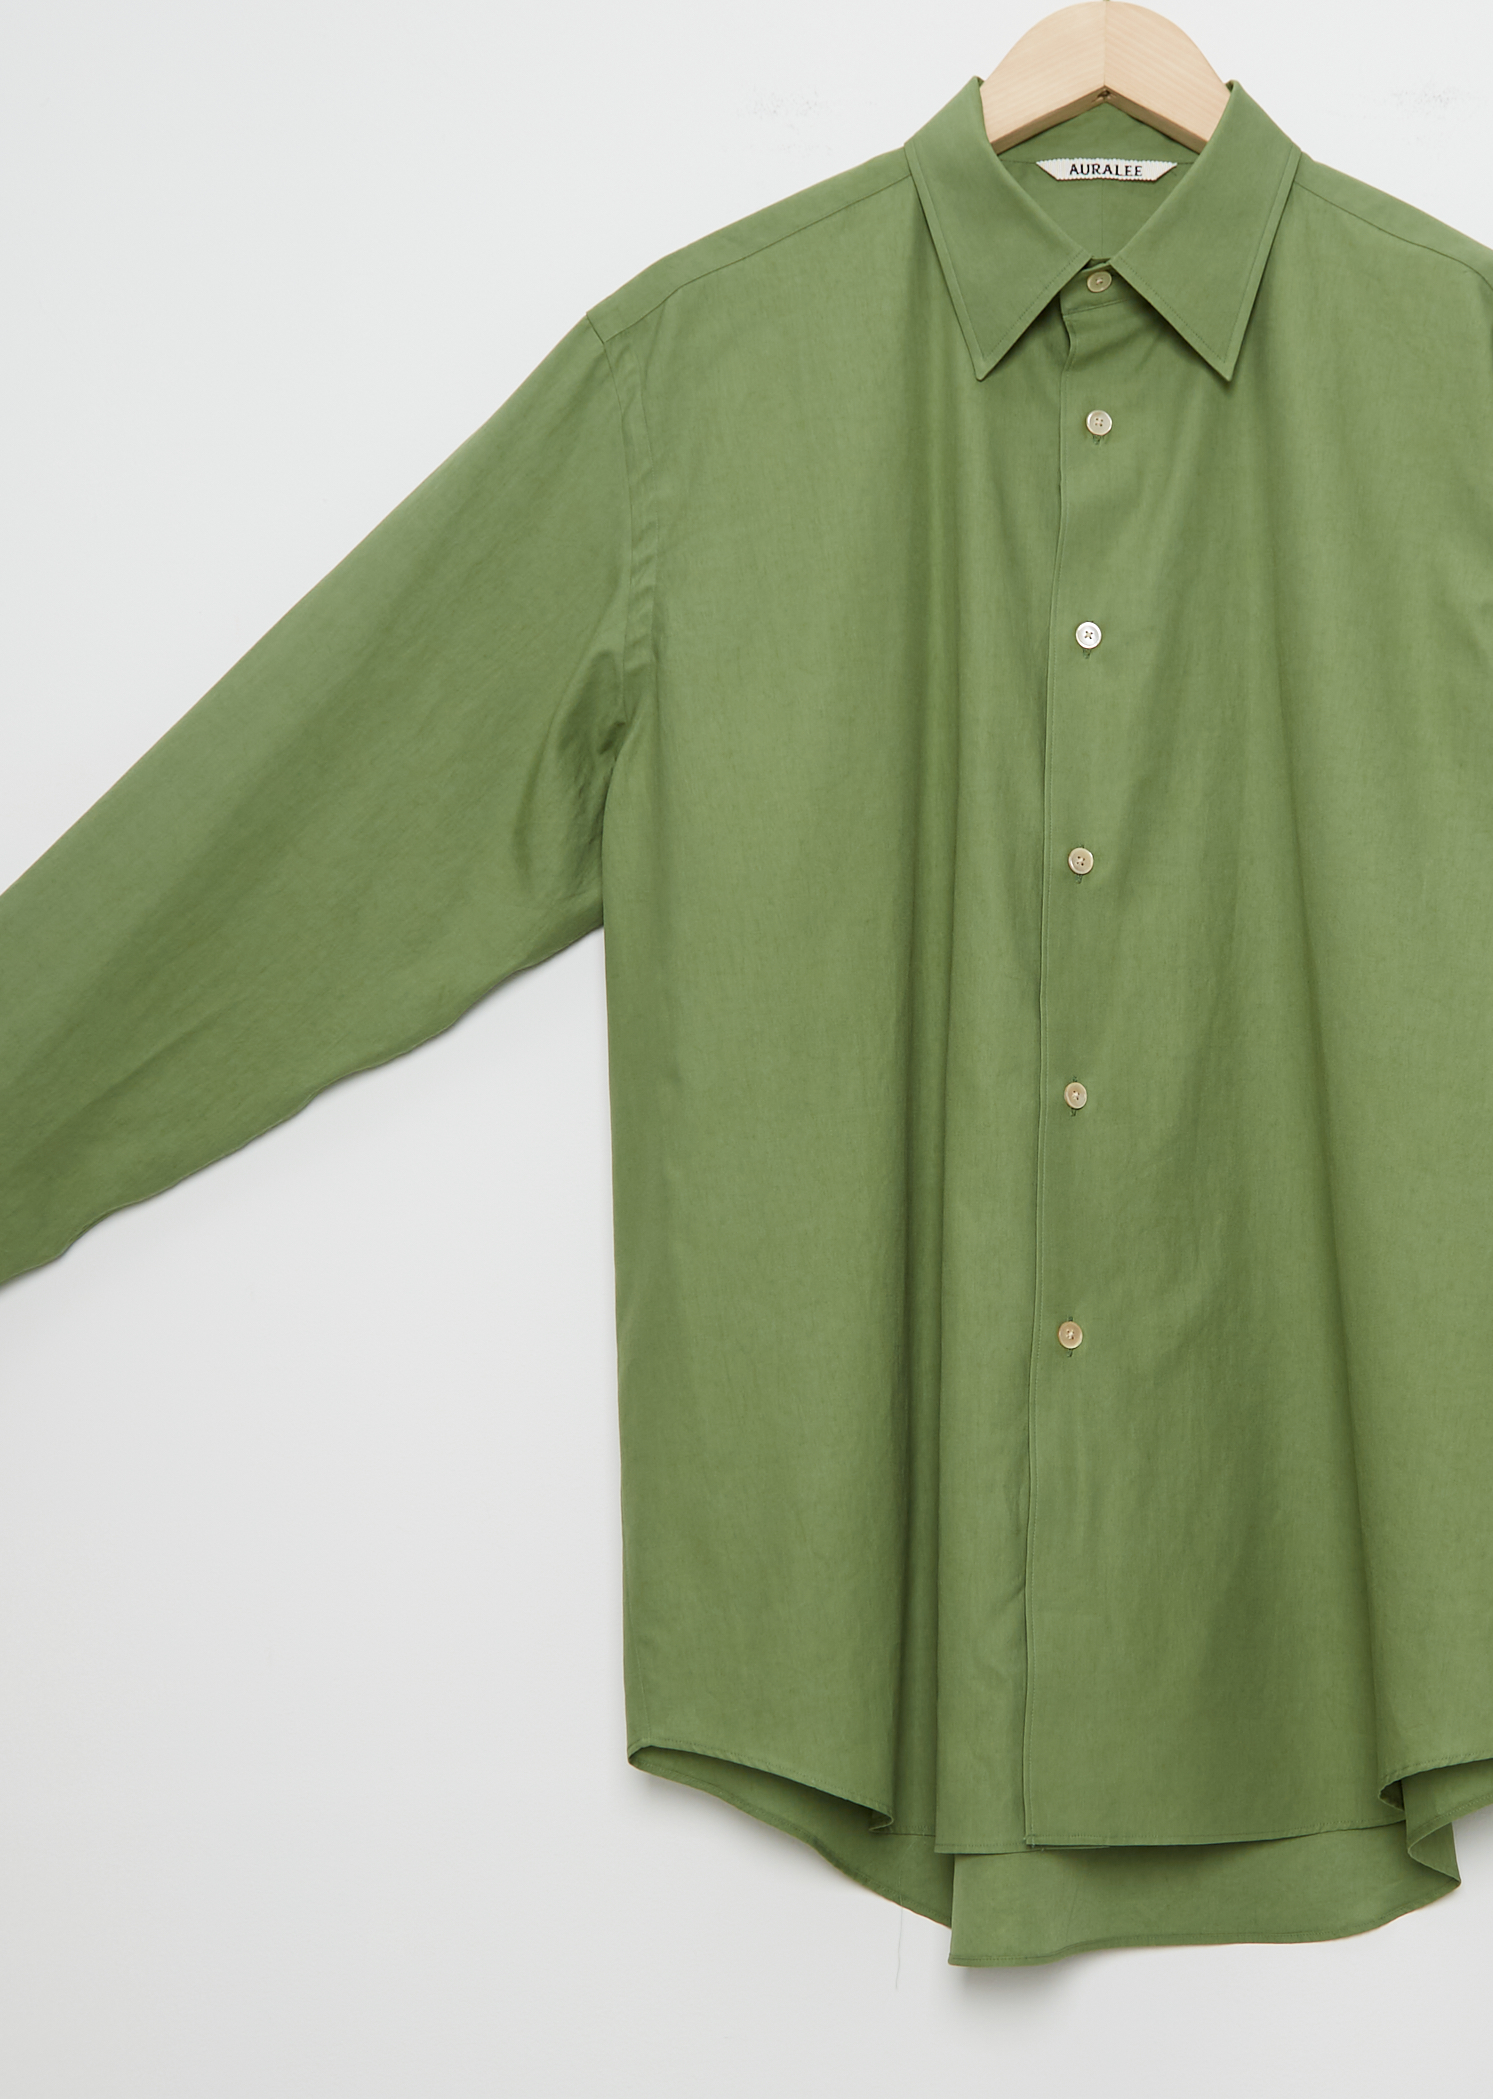 Men's Washed Finx Twill Cotton Shirt — Khaki Green - 4 / Khaki Green